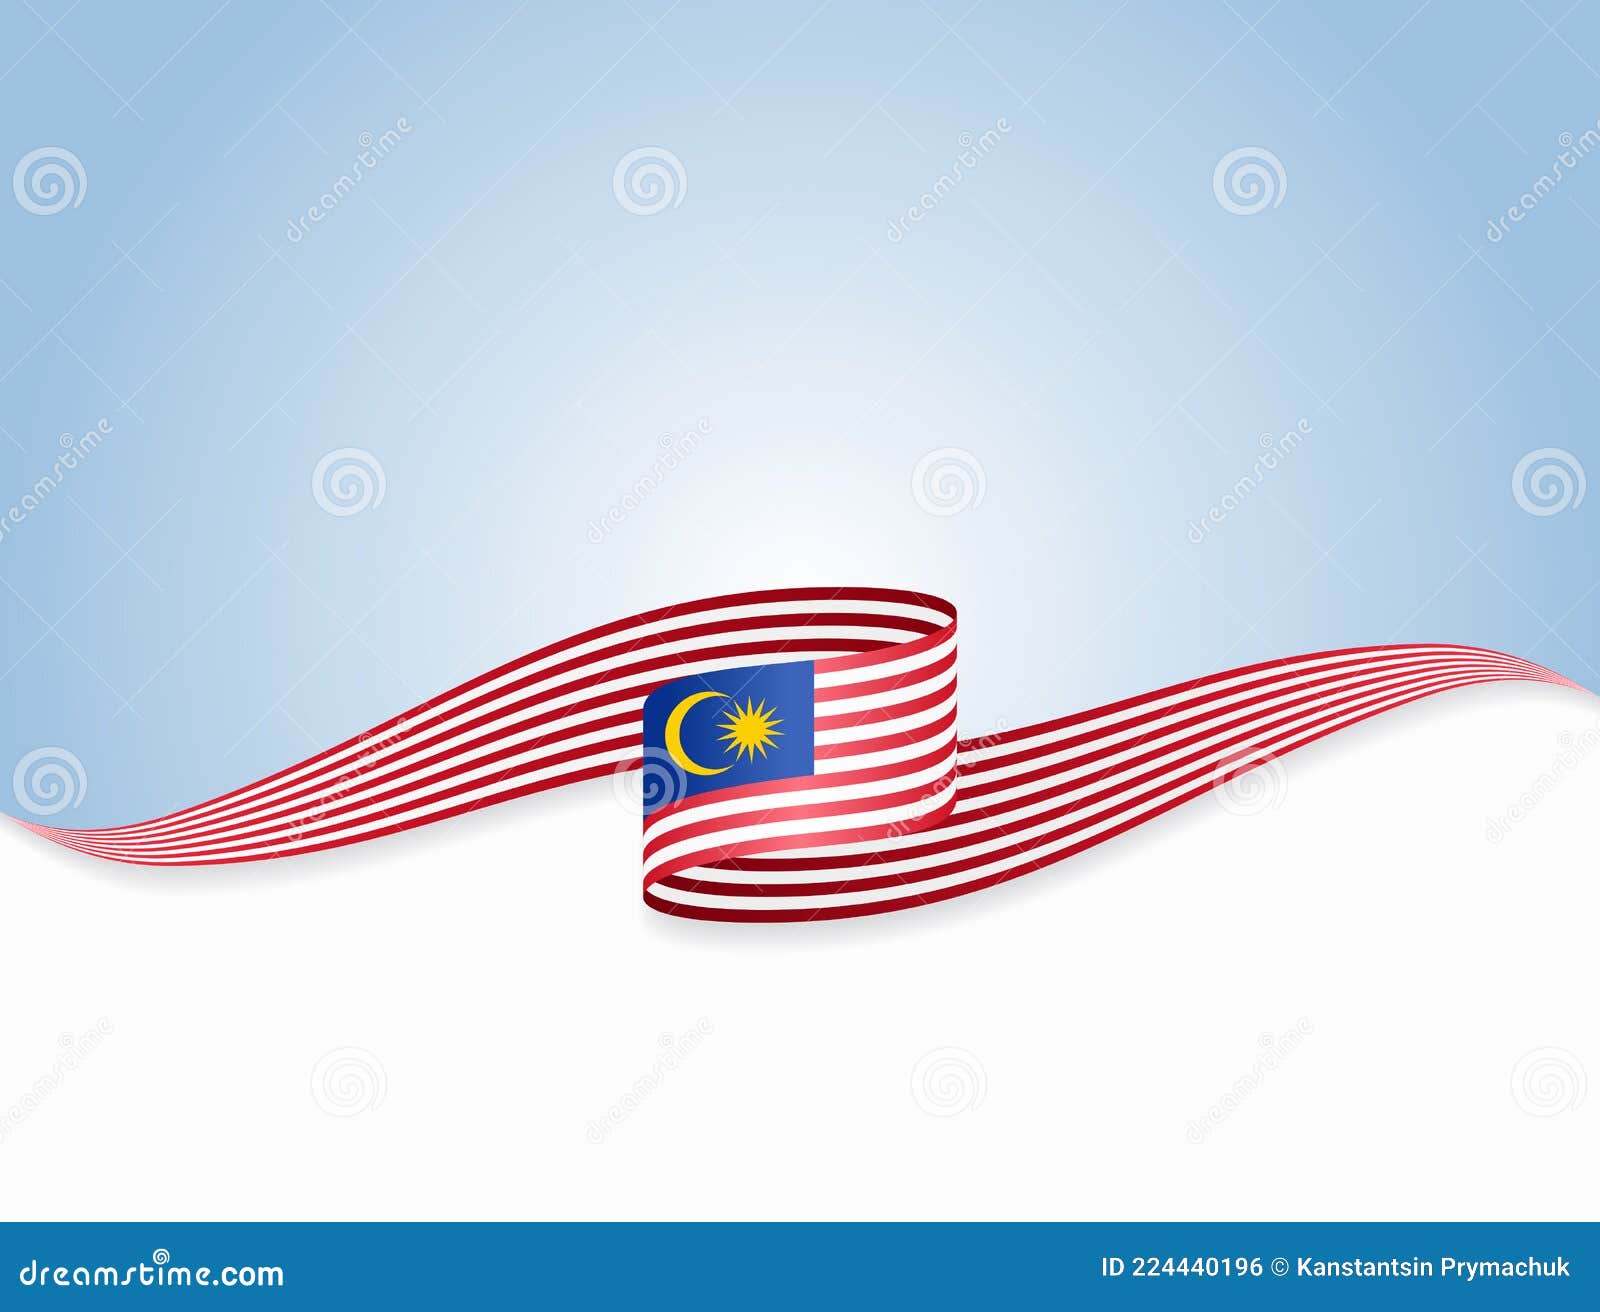 malaysian flag wavy abstract background.  .